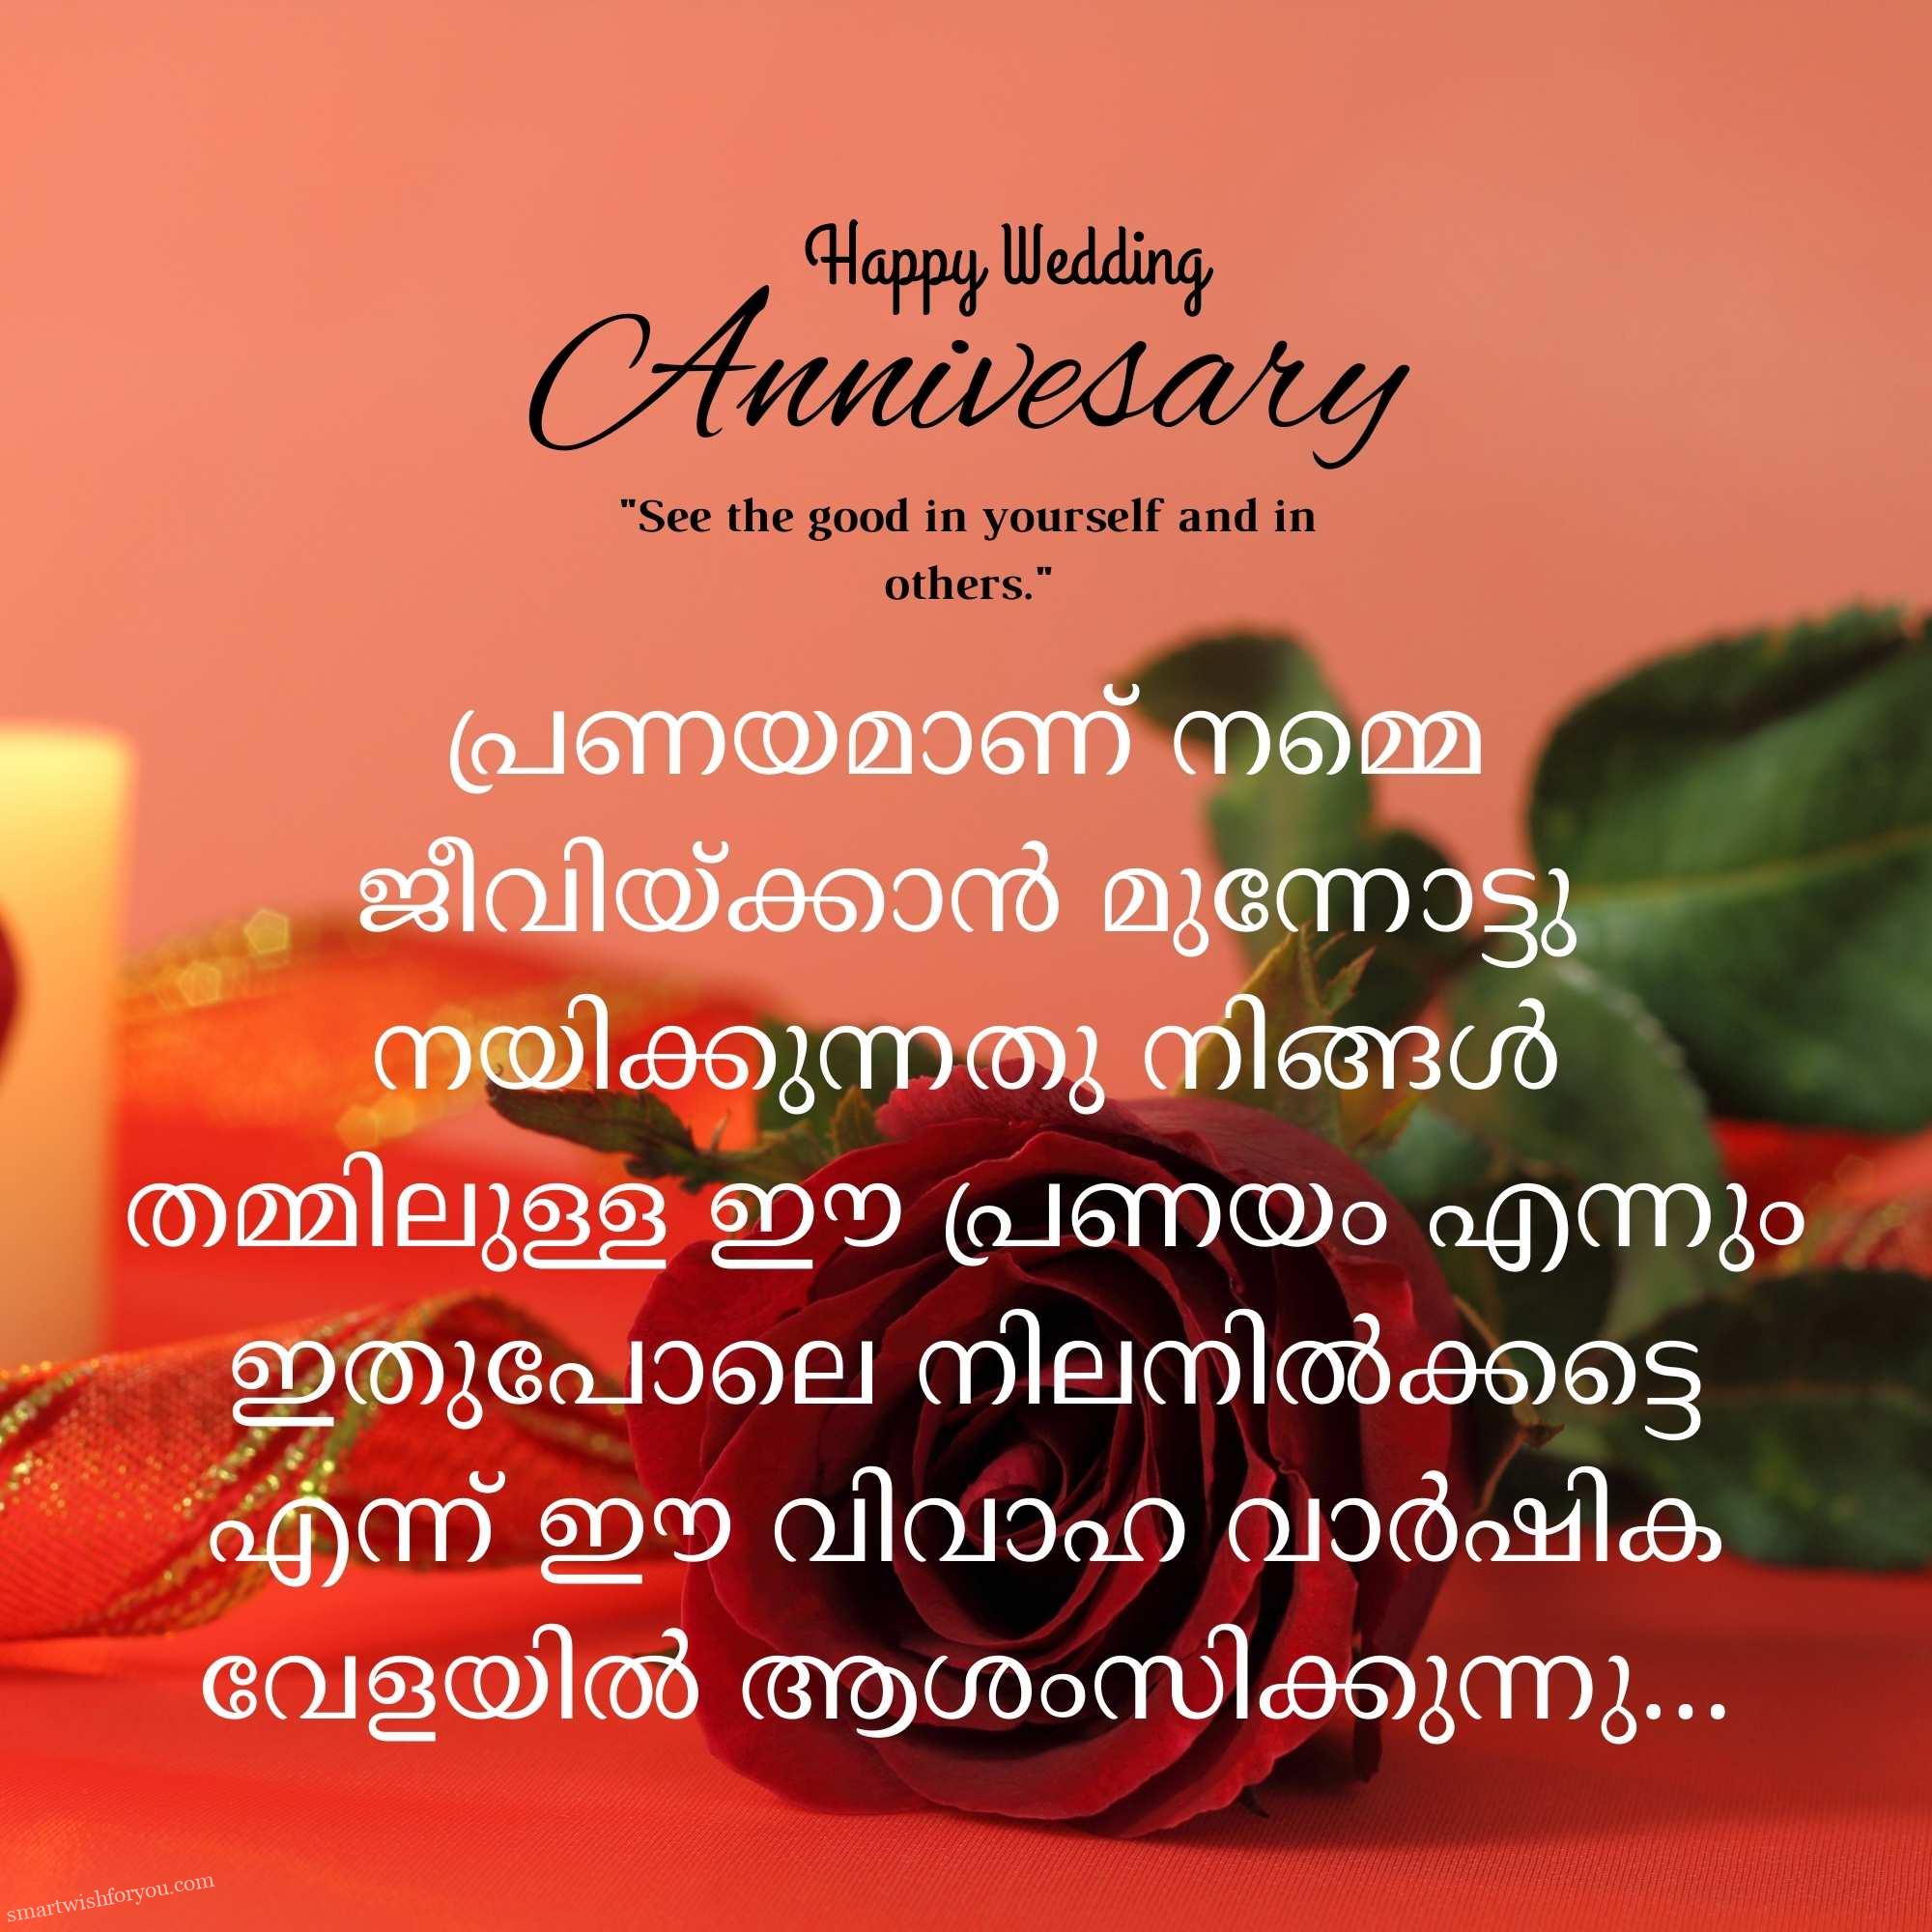 wedding anniversary wishes in malayalam